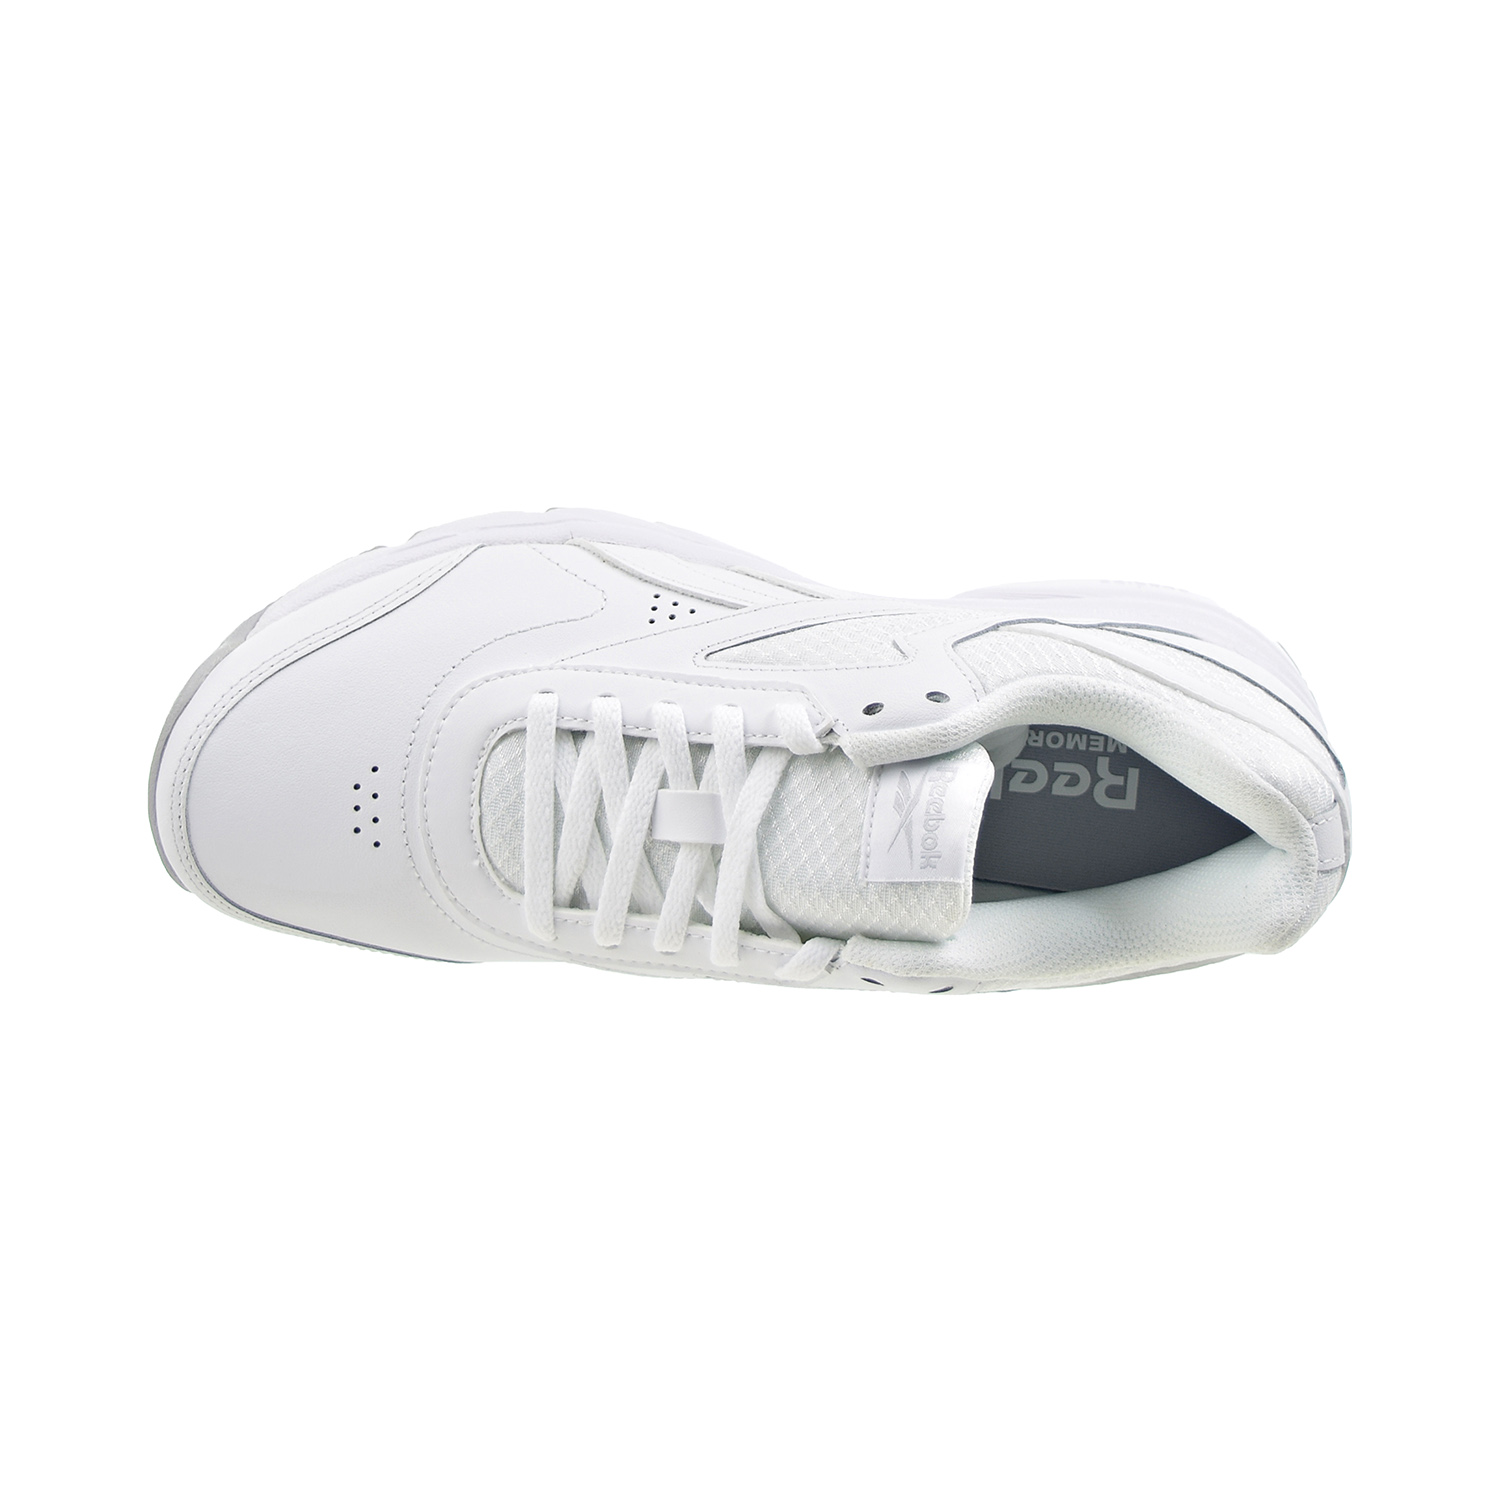 Reebok Work N Cushion 4.0 Men's Shoes Oil Resistant White-Cold Grey 2 fu7354 (7 M US)